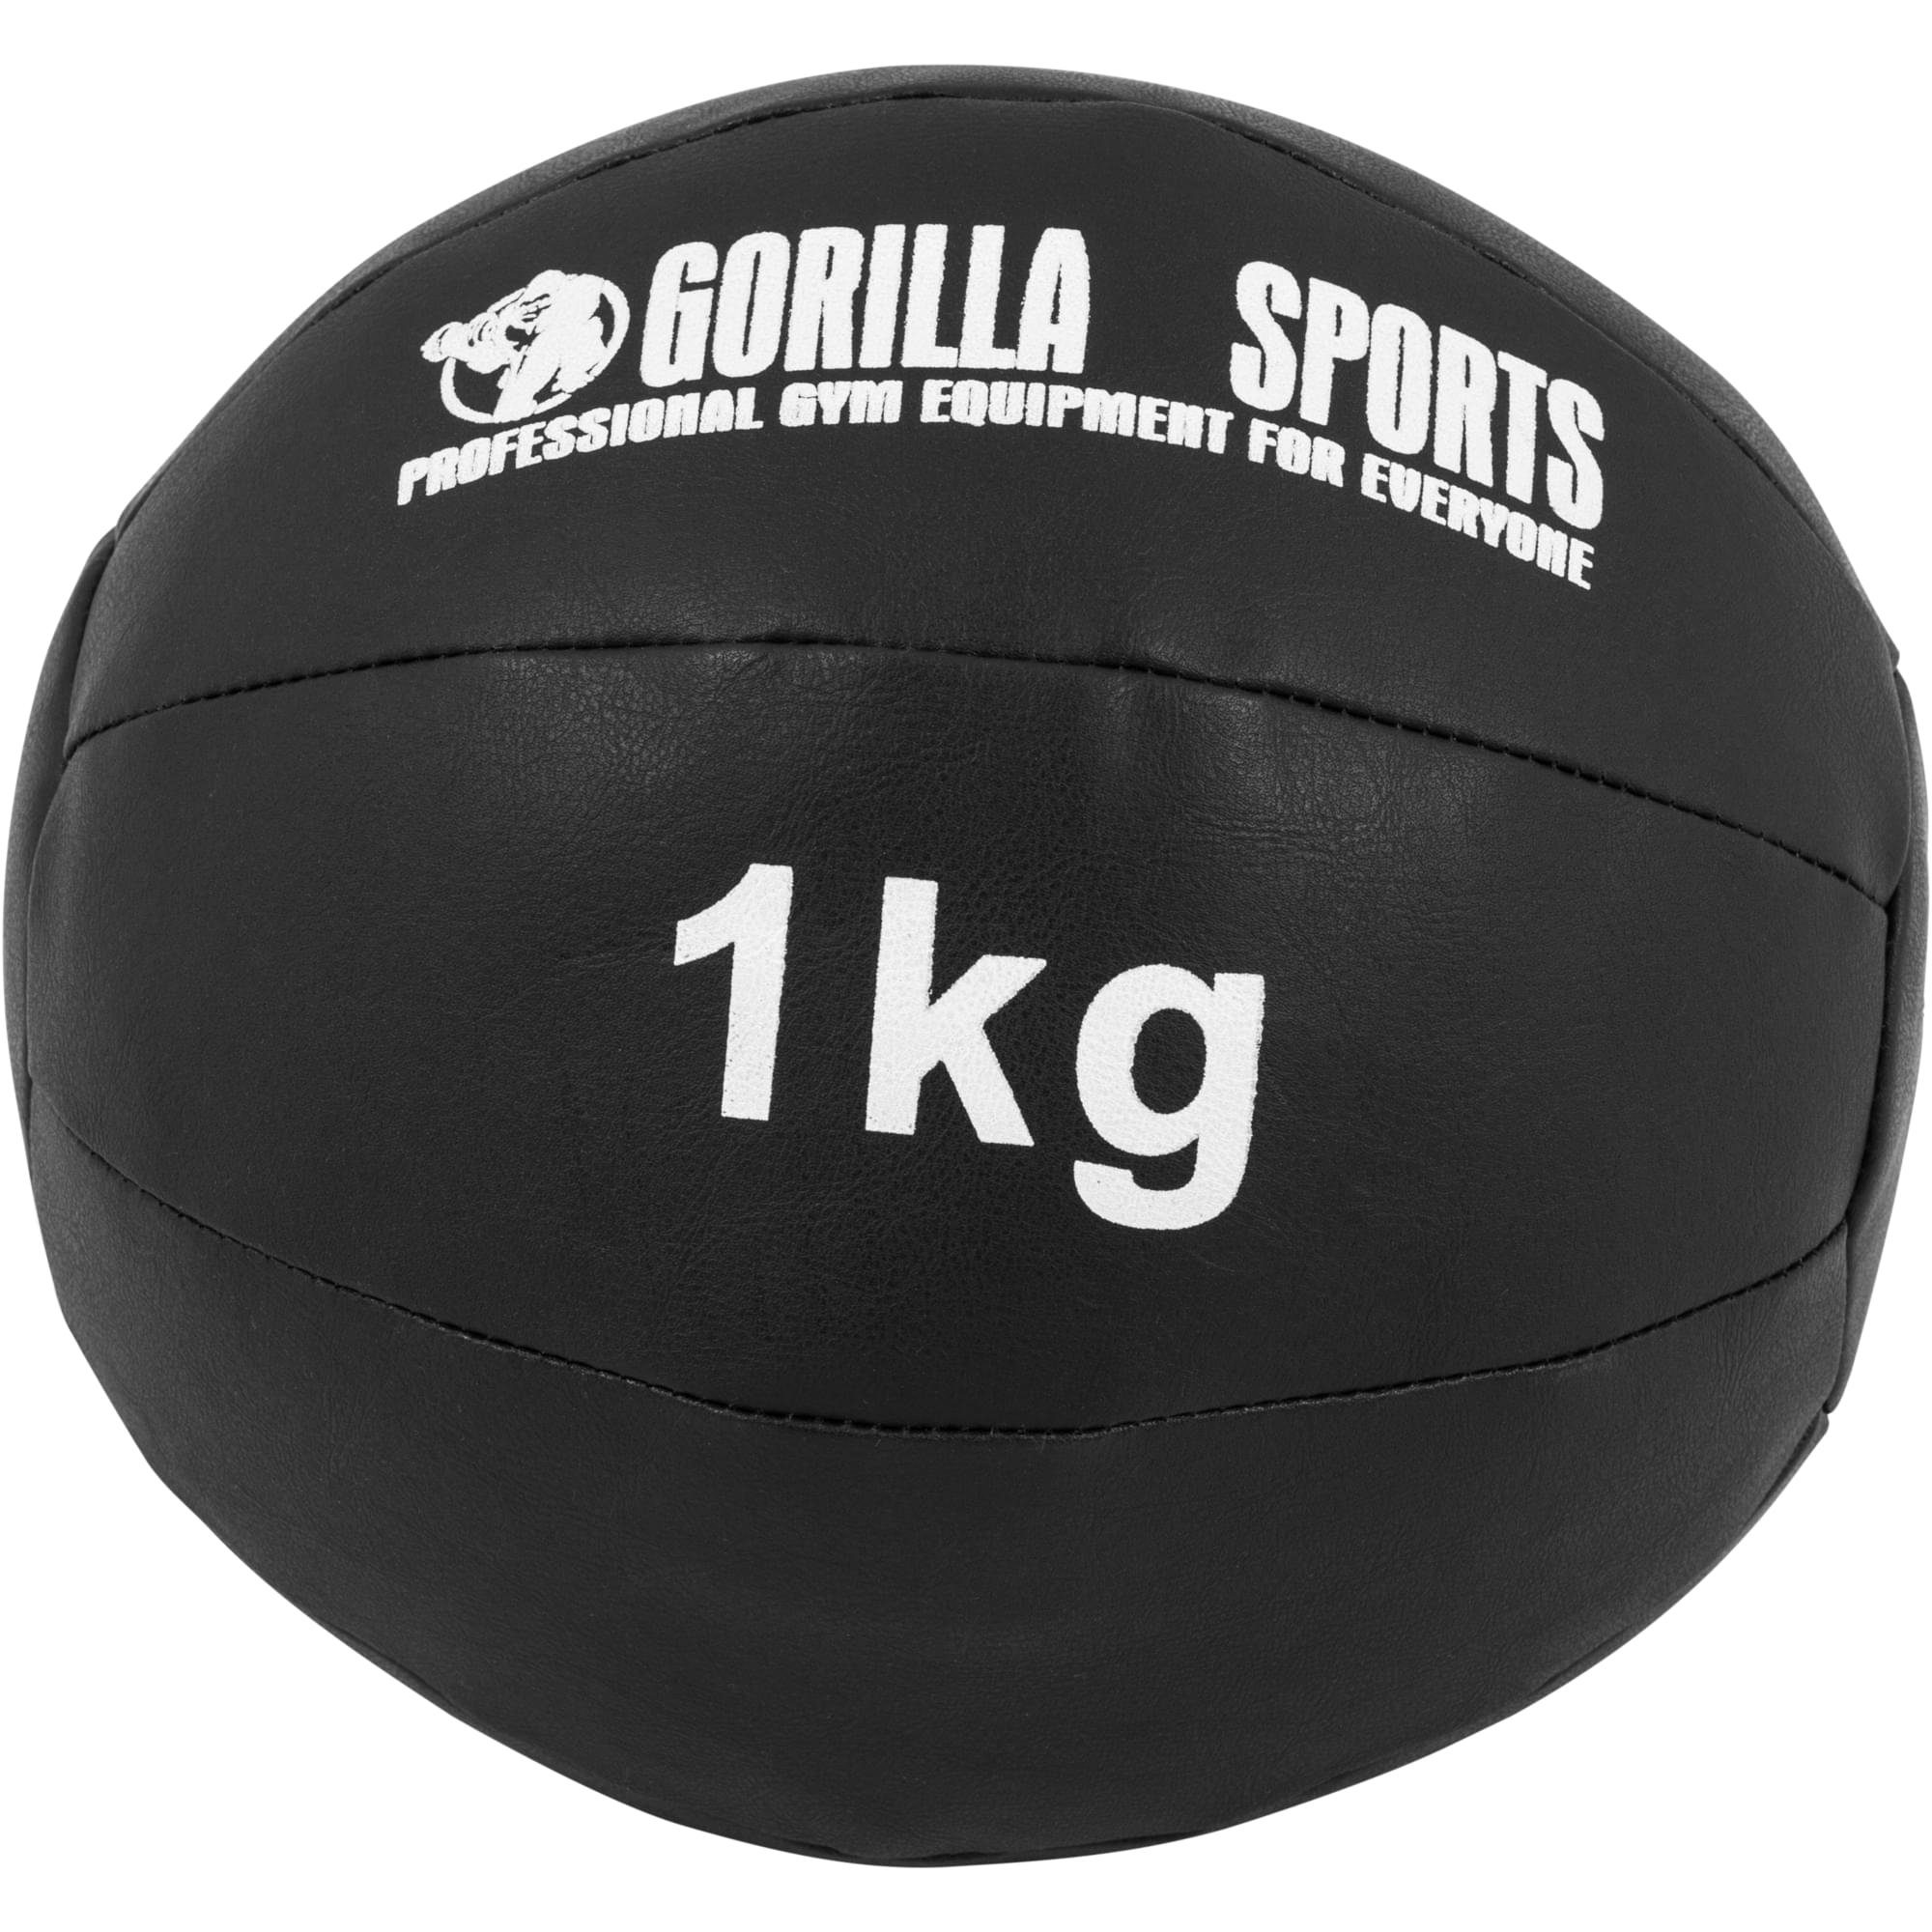 GORILLA SPORTS Medizinball 55 aus Gewichtsball kg Leder, Trainingsball, Einzeln/Set, Fitnessball, Set 29cm